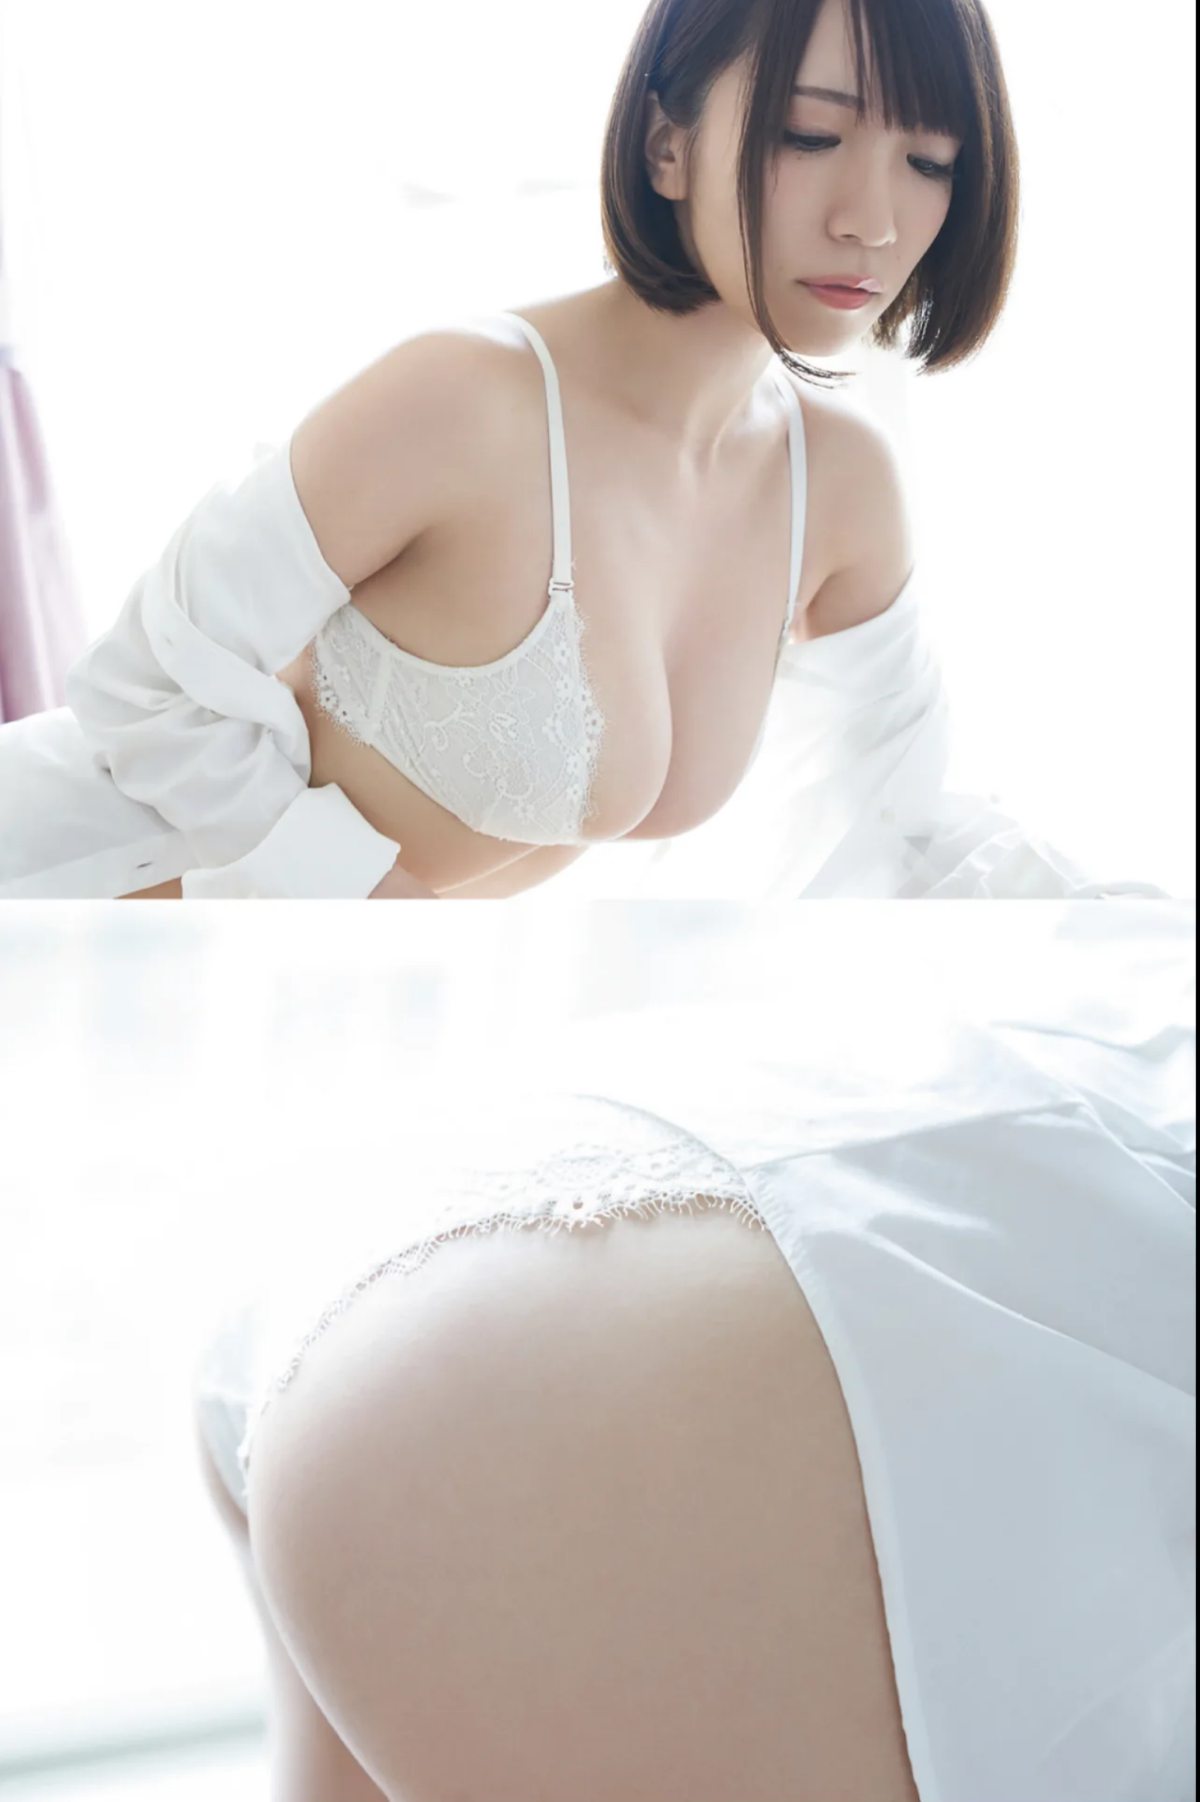 FRIDAY Digital Photobook Airi Shimizu 清水あいり Too erotic body Vol 3 エロすぎるカラダ Vol 3 2021 04 30 0022 1476924377.jpg